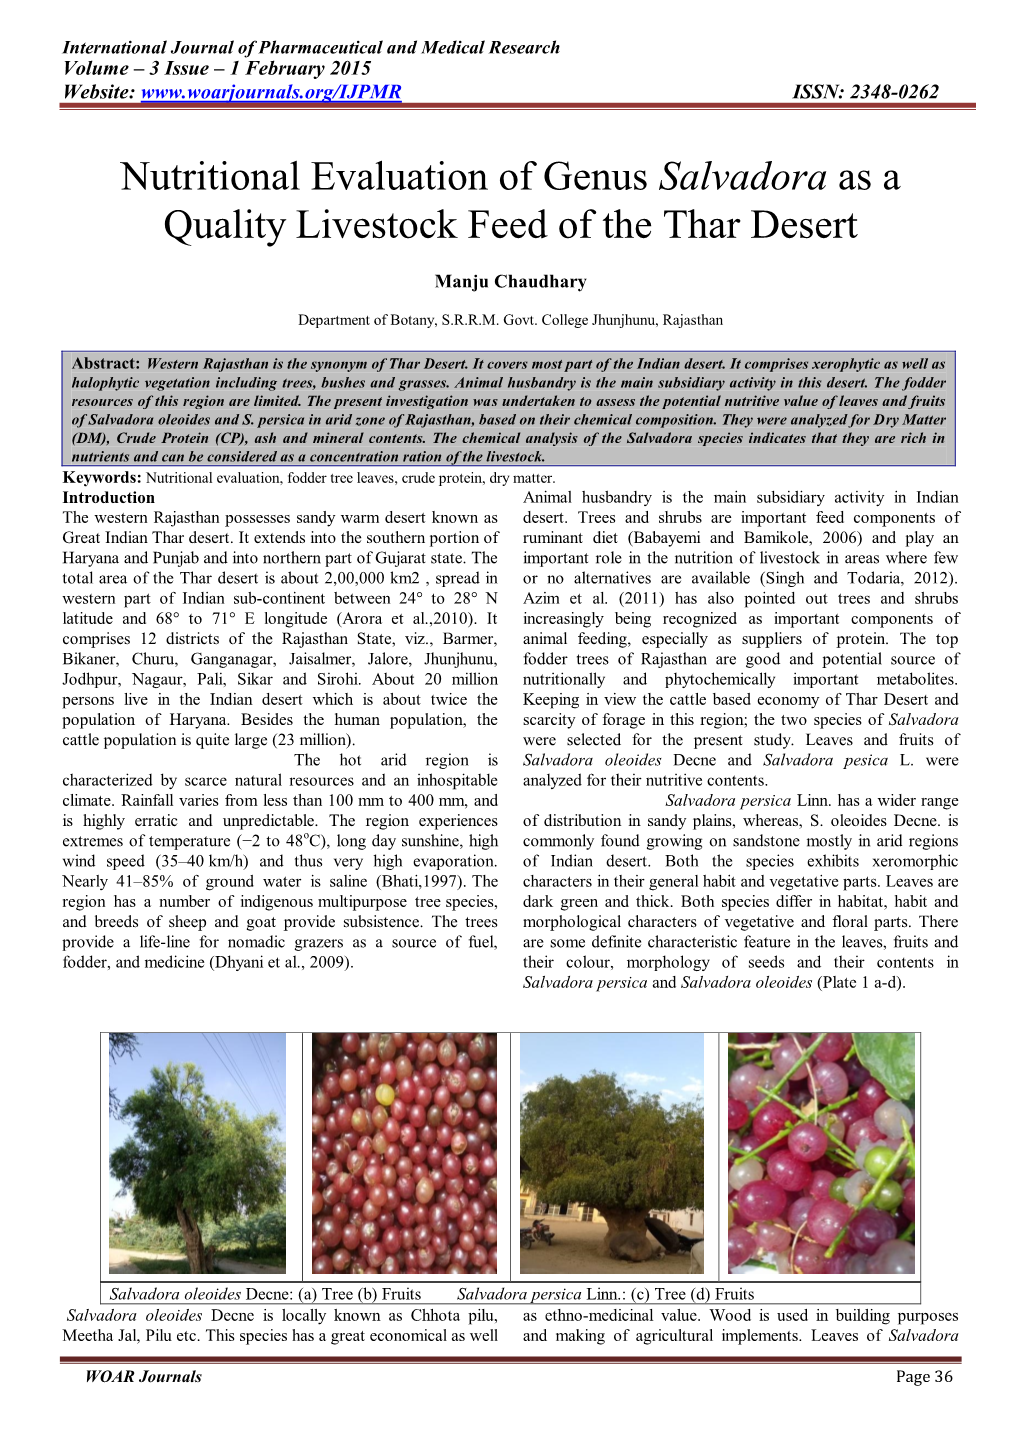 Nutritional Evaluation of Genus Salvadora As a Quality Livestock Feed of the Thar Desert